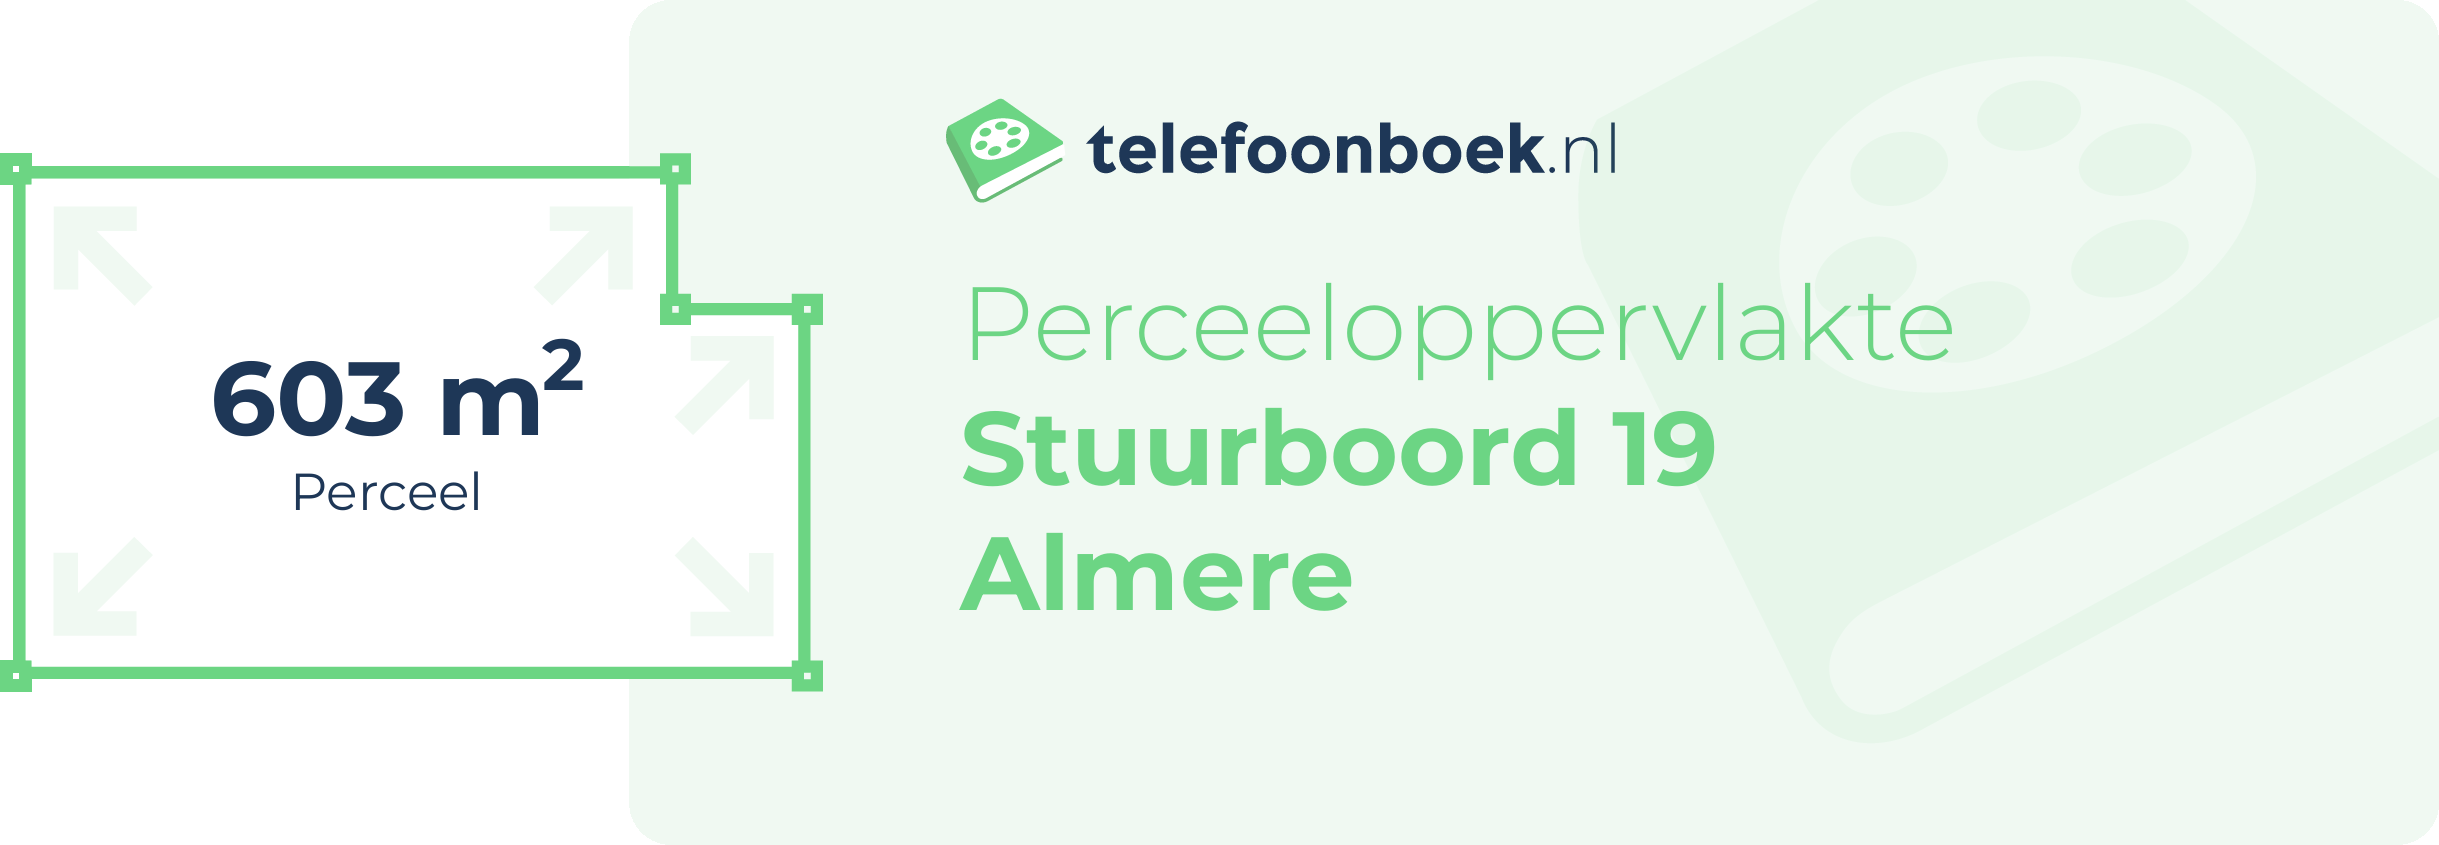 Perceeloppervlakte Stuurboord 19 Almere